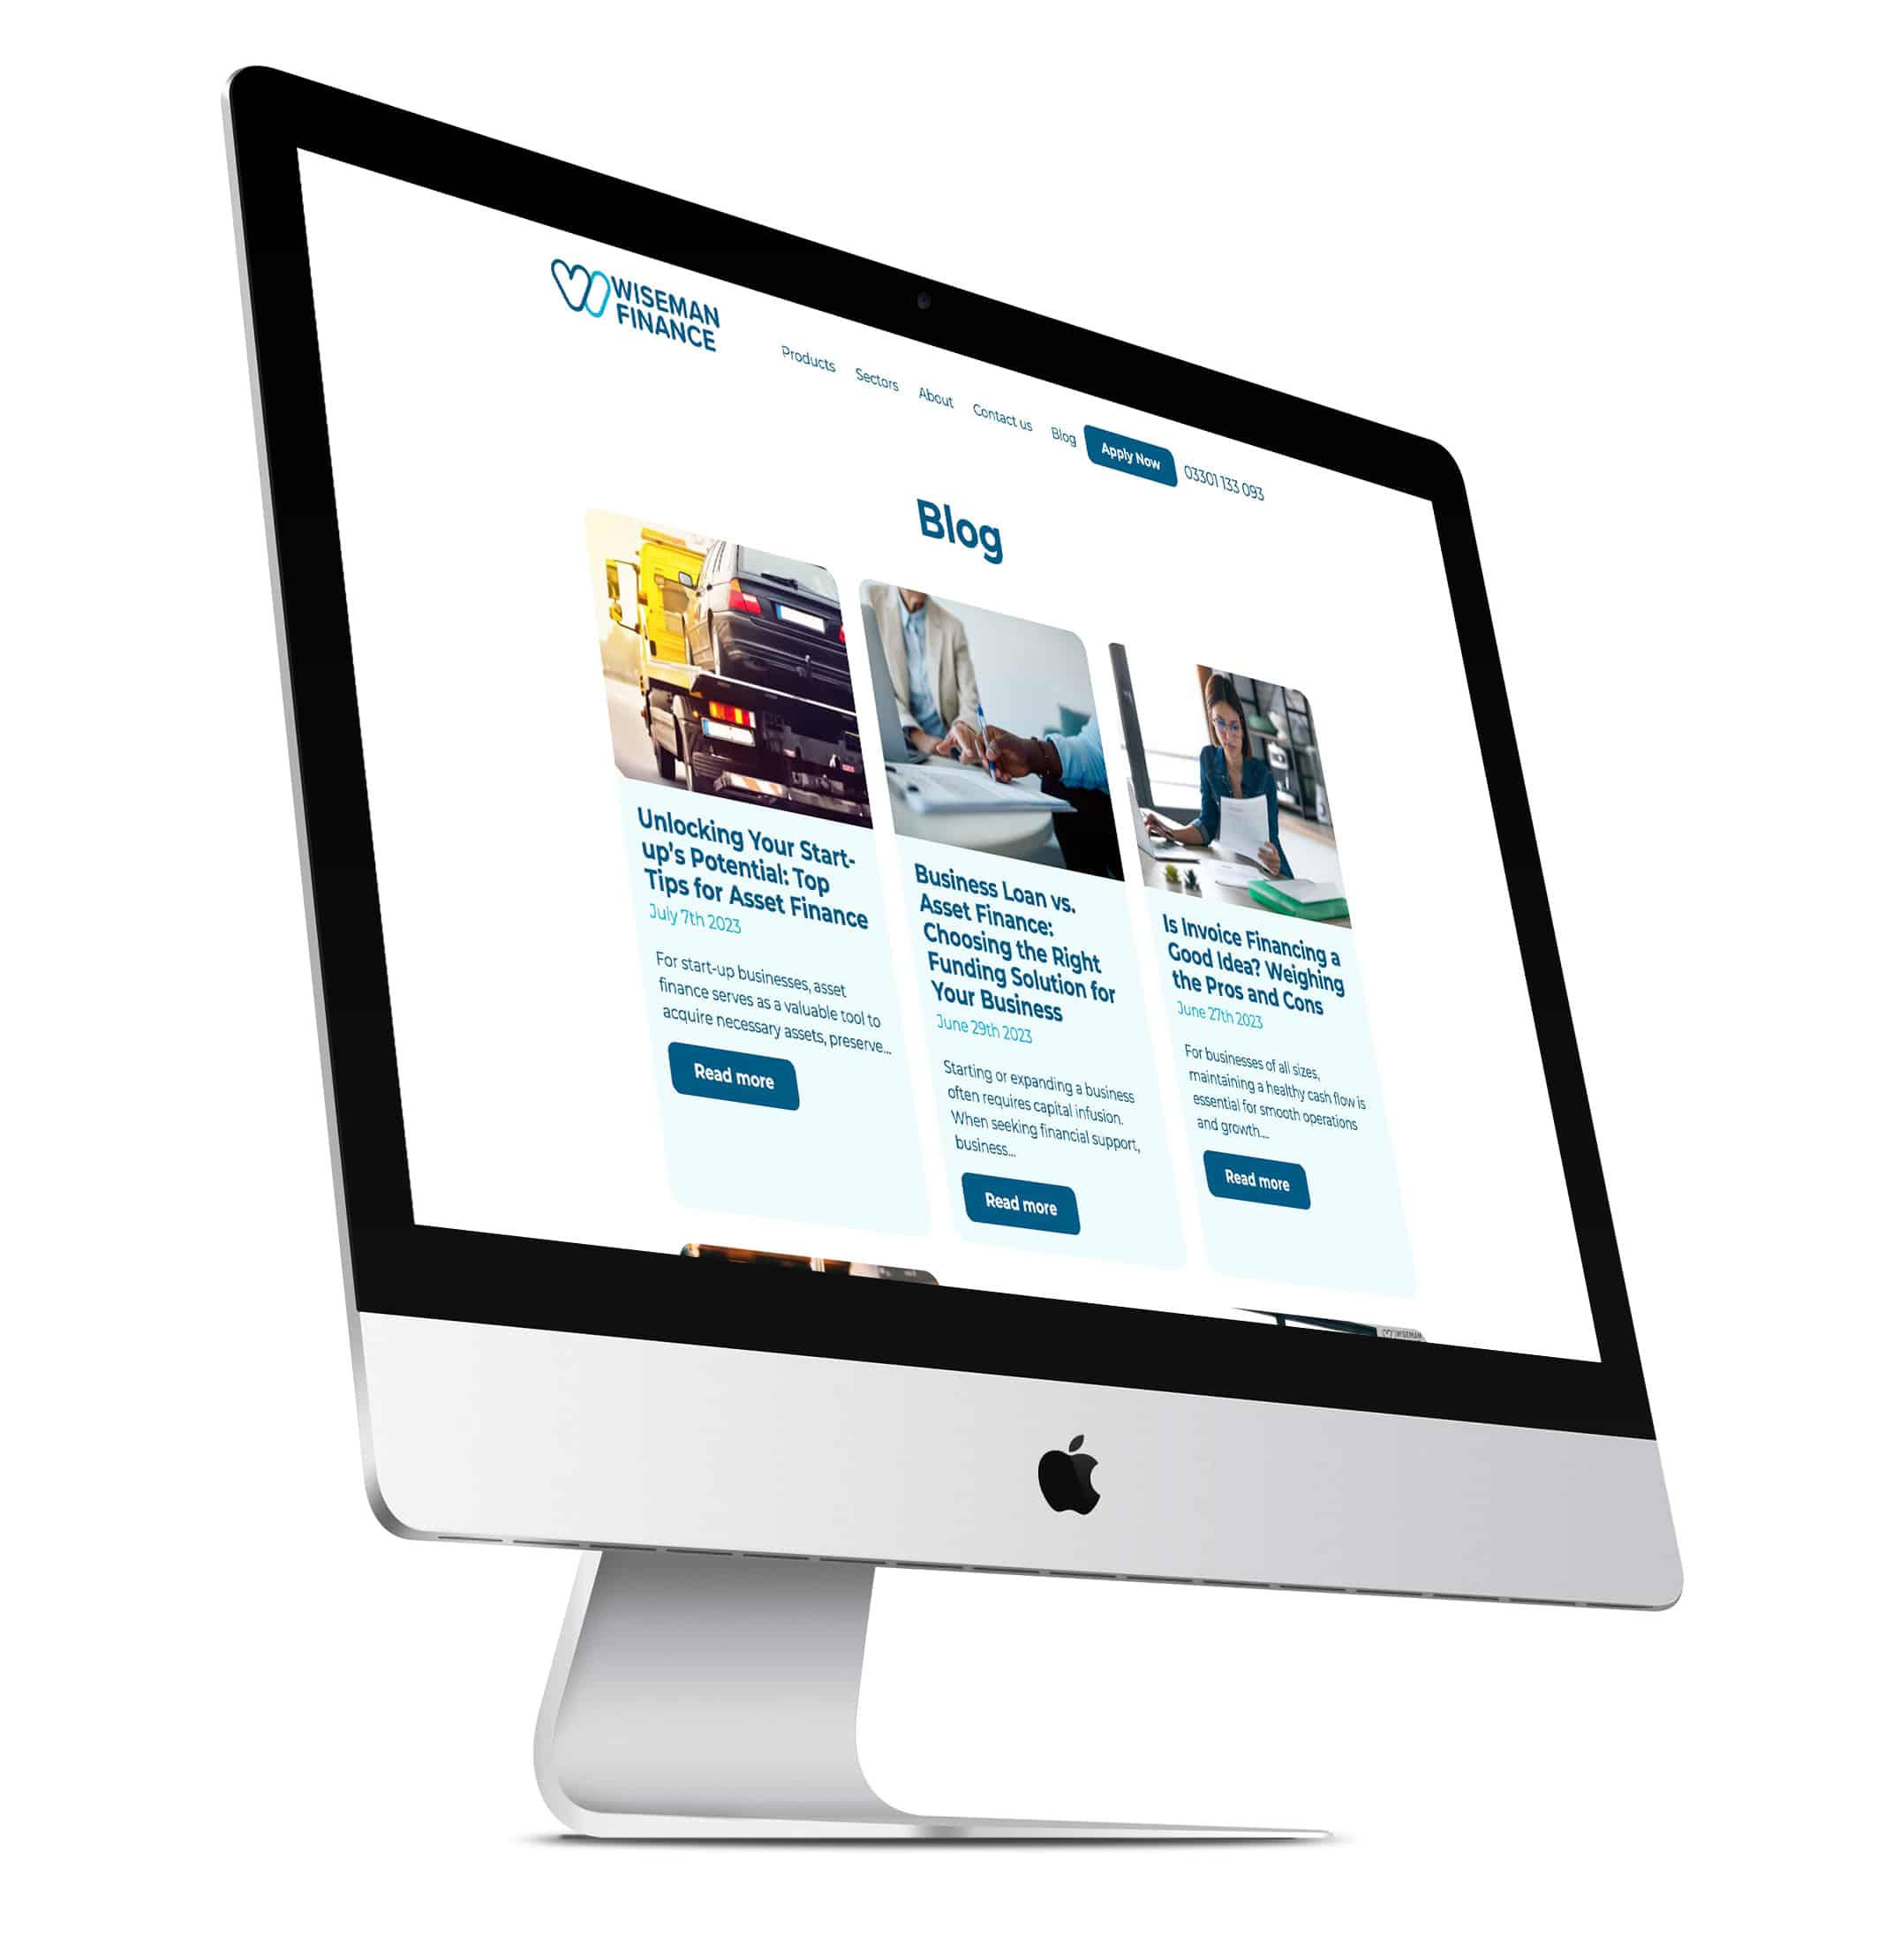 Wiseman Finance Website design and build